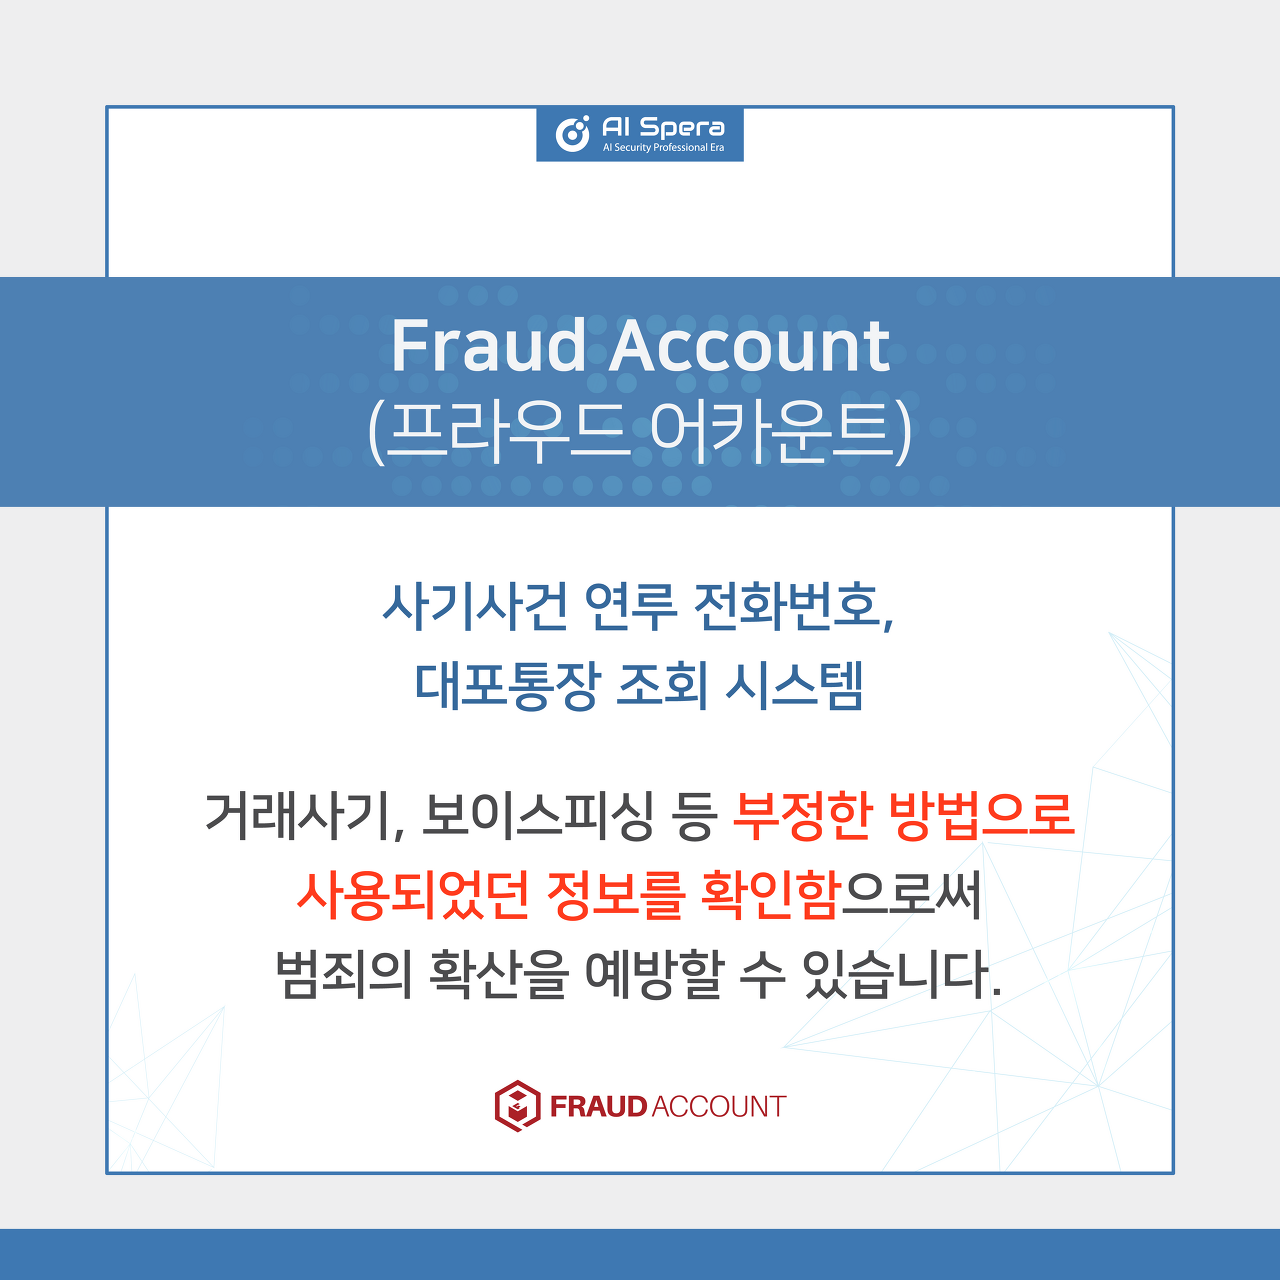 Fraud Account(프라우드 어카운트) - 사기사건 연루 전화번호, 대포통장 조회 시스팀 / 거래사기, 보이스피싱 등 부정한 방법으로 사용되었던 정보를 확인함으로써 범죄의 확산을 예방할 수 있습니다.